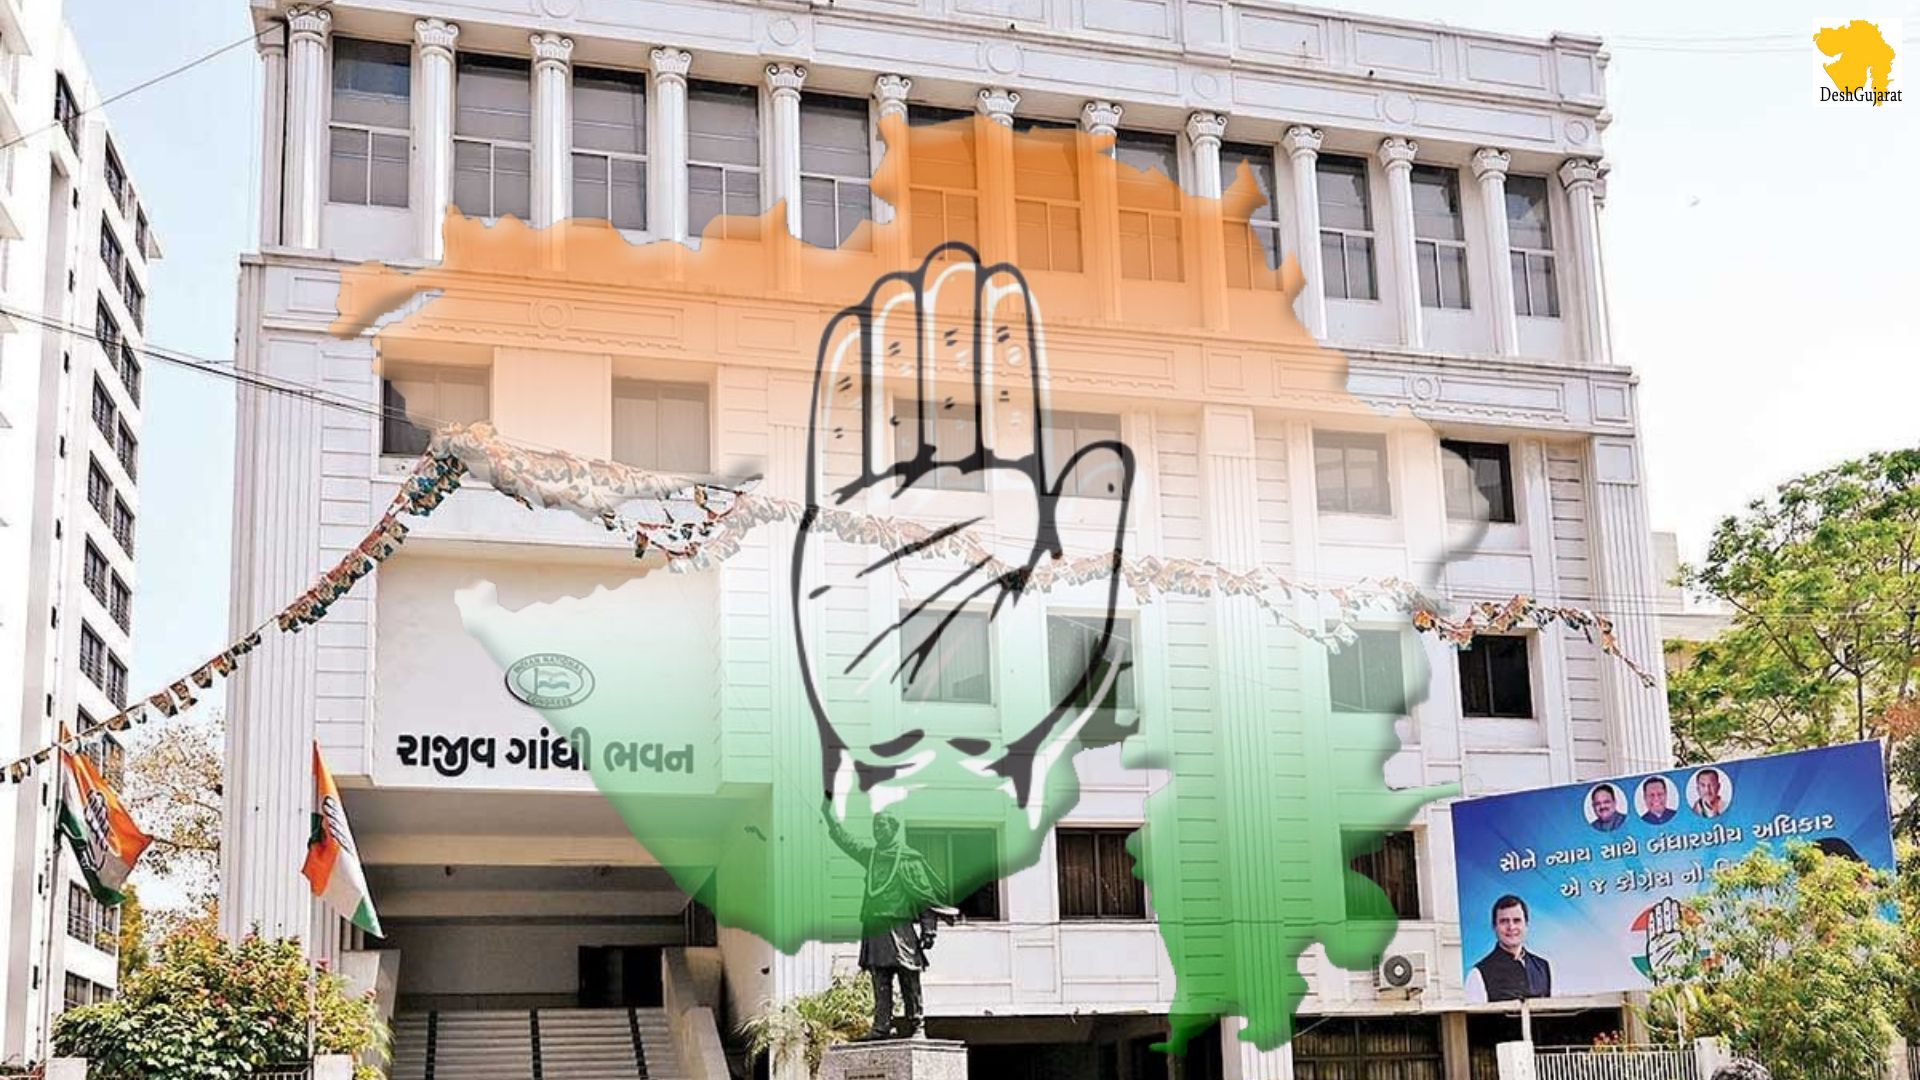 Congress workers ransack party headquarters in Gujarat